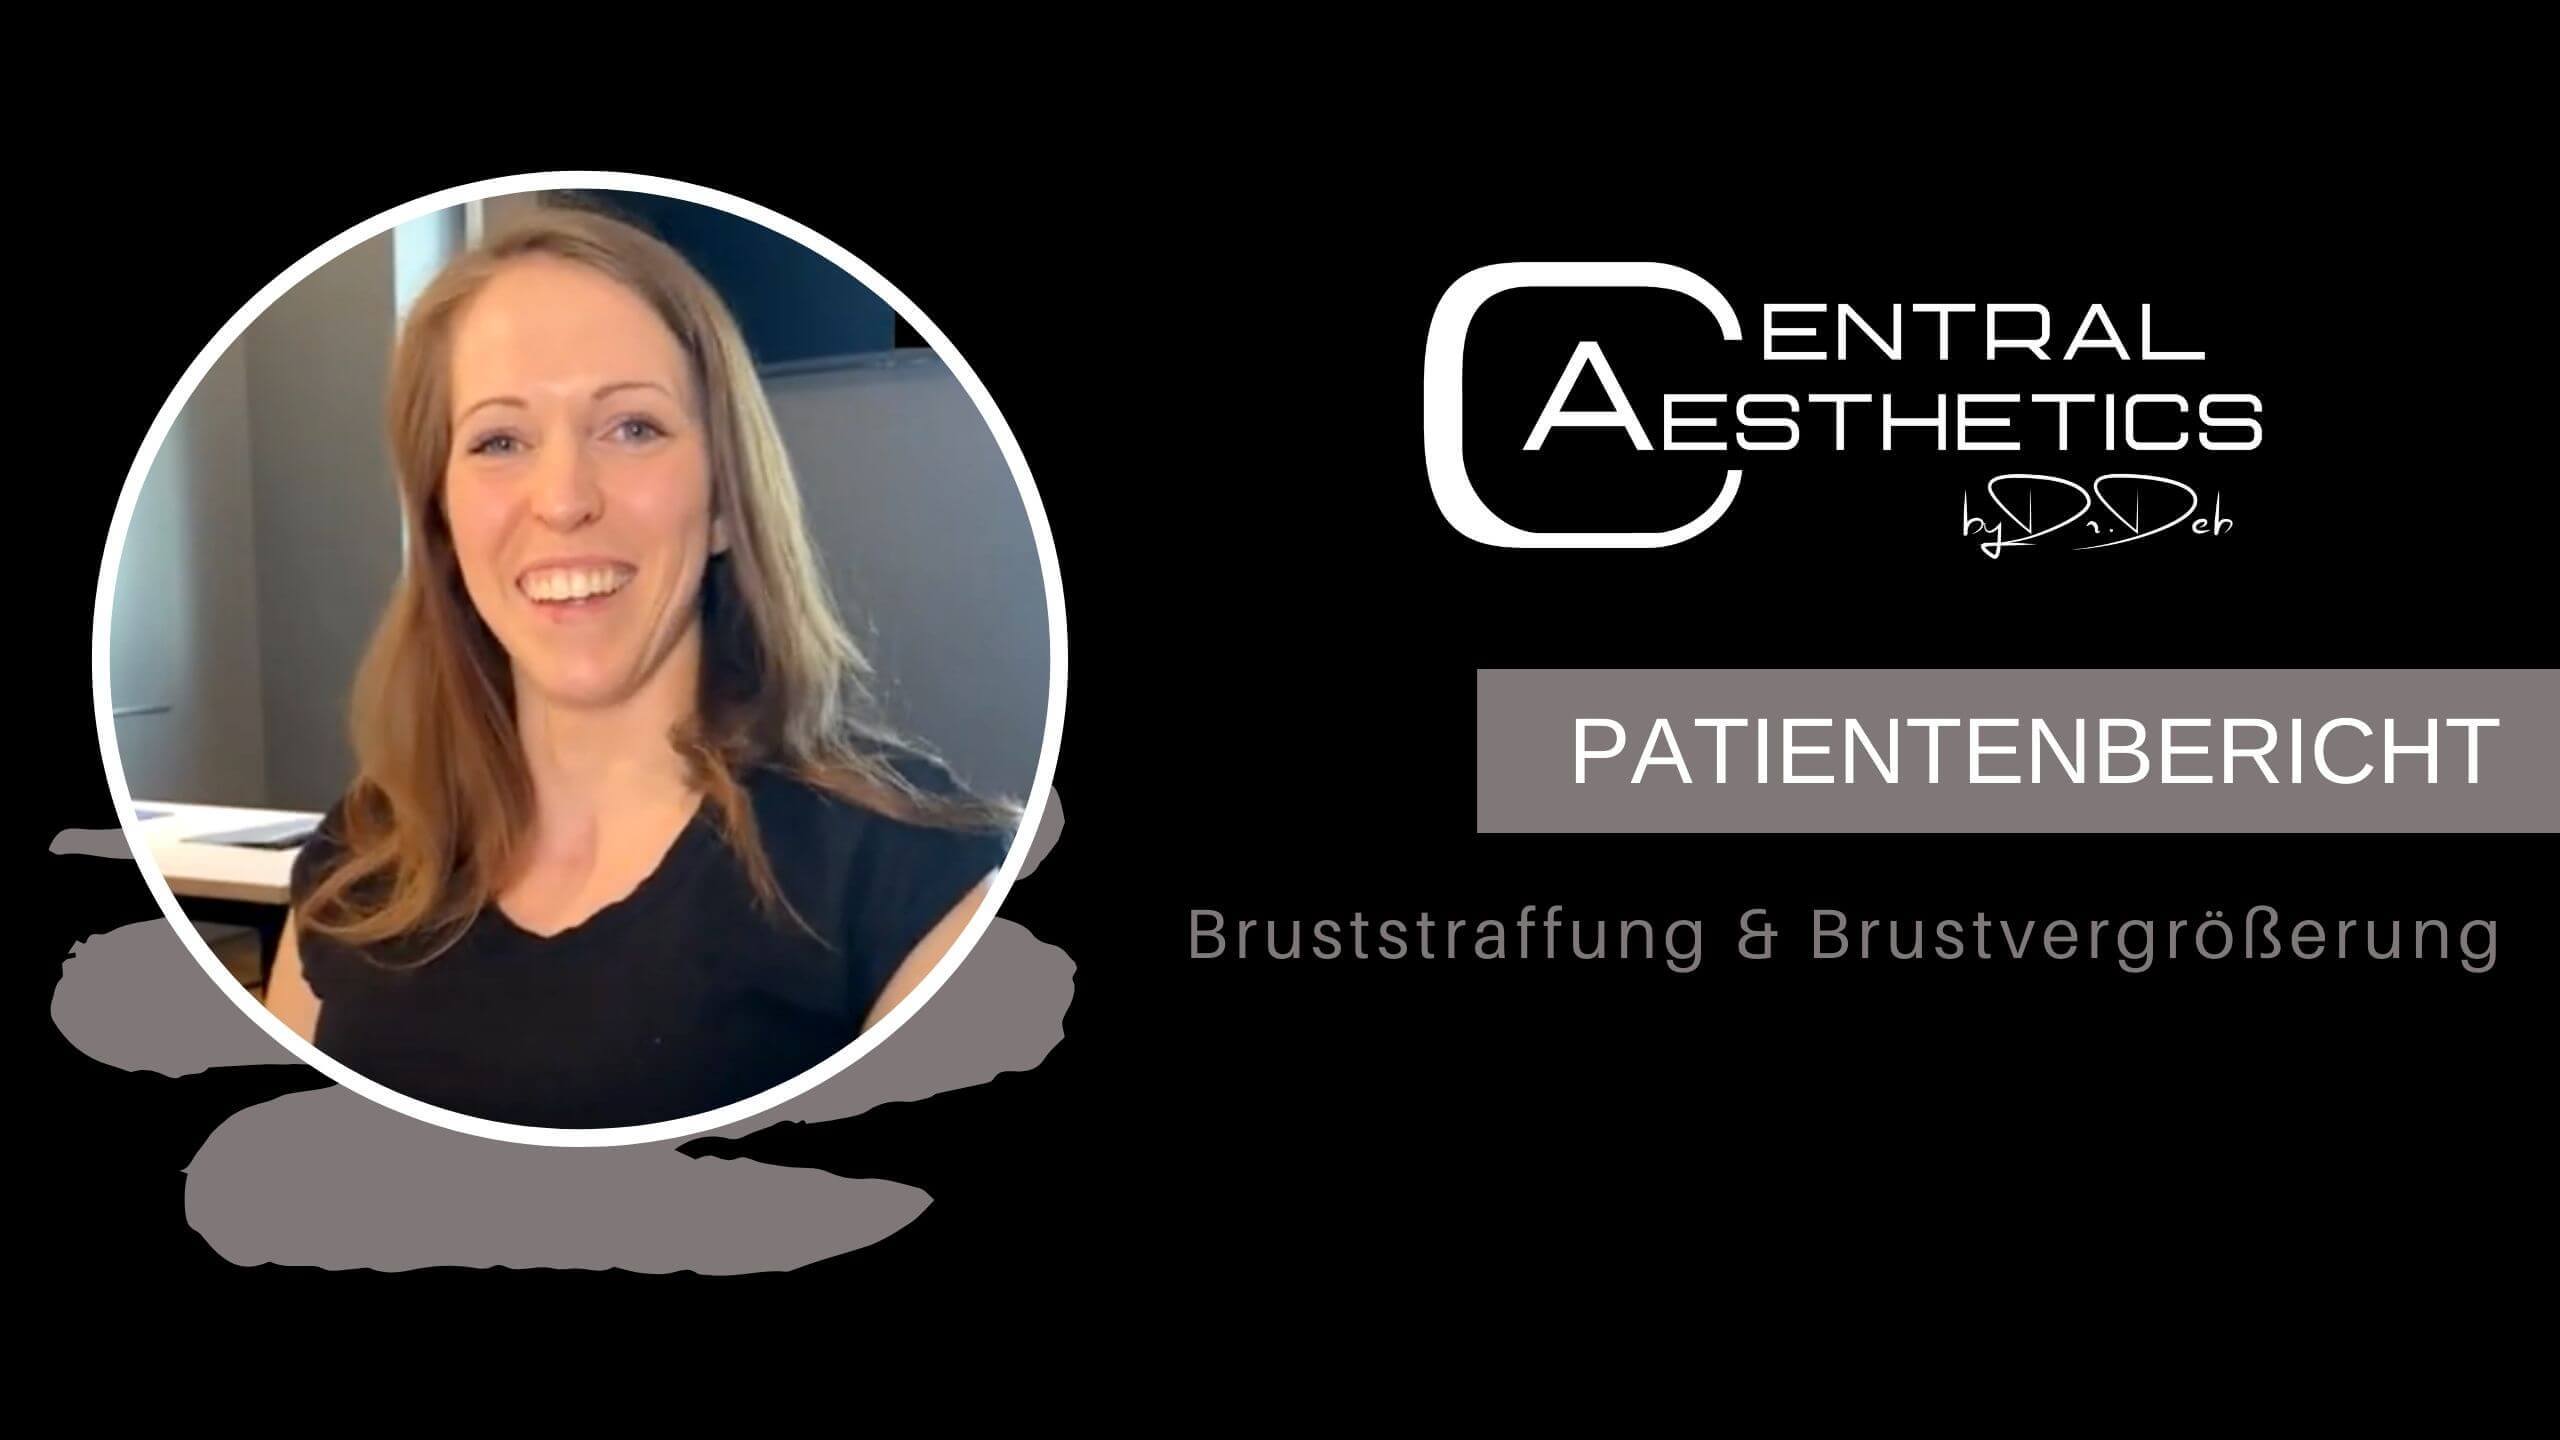 Video Bruststraffung, Dr. Deb, Central Aesthetics, Plastische Chirurgie Frankfurt